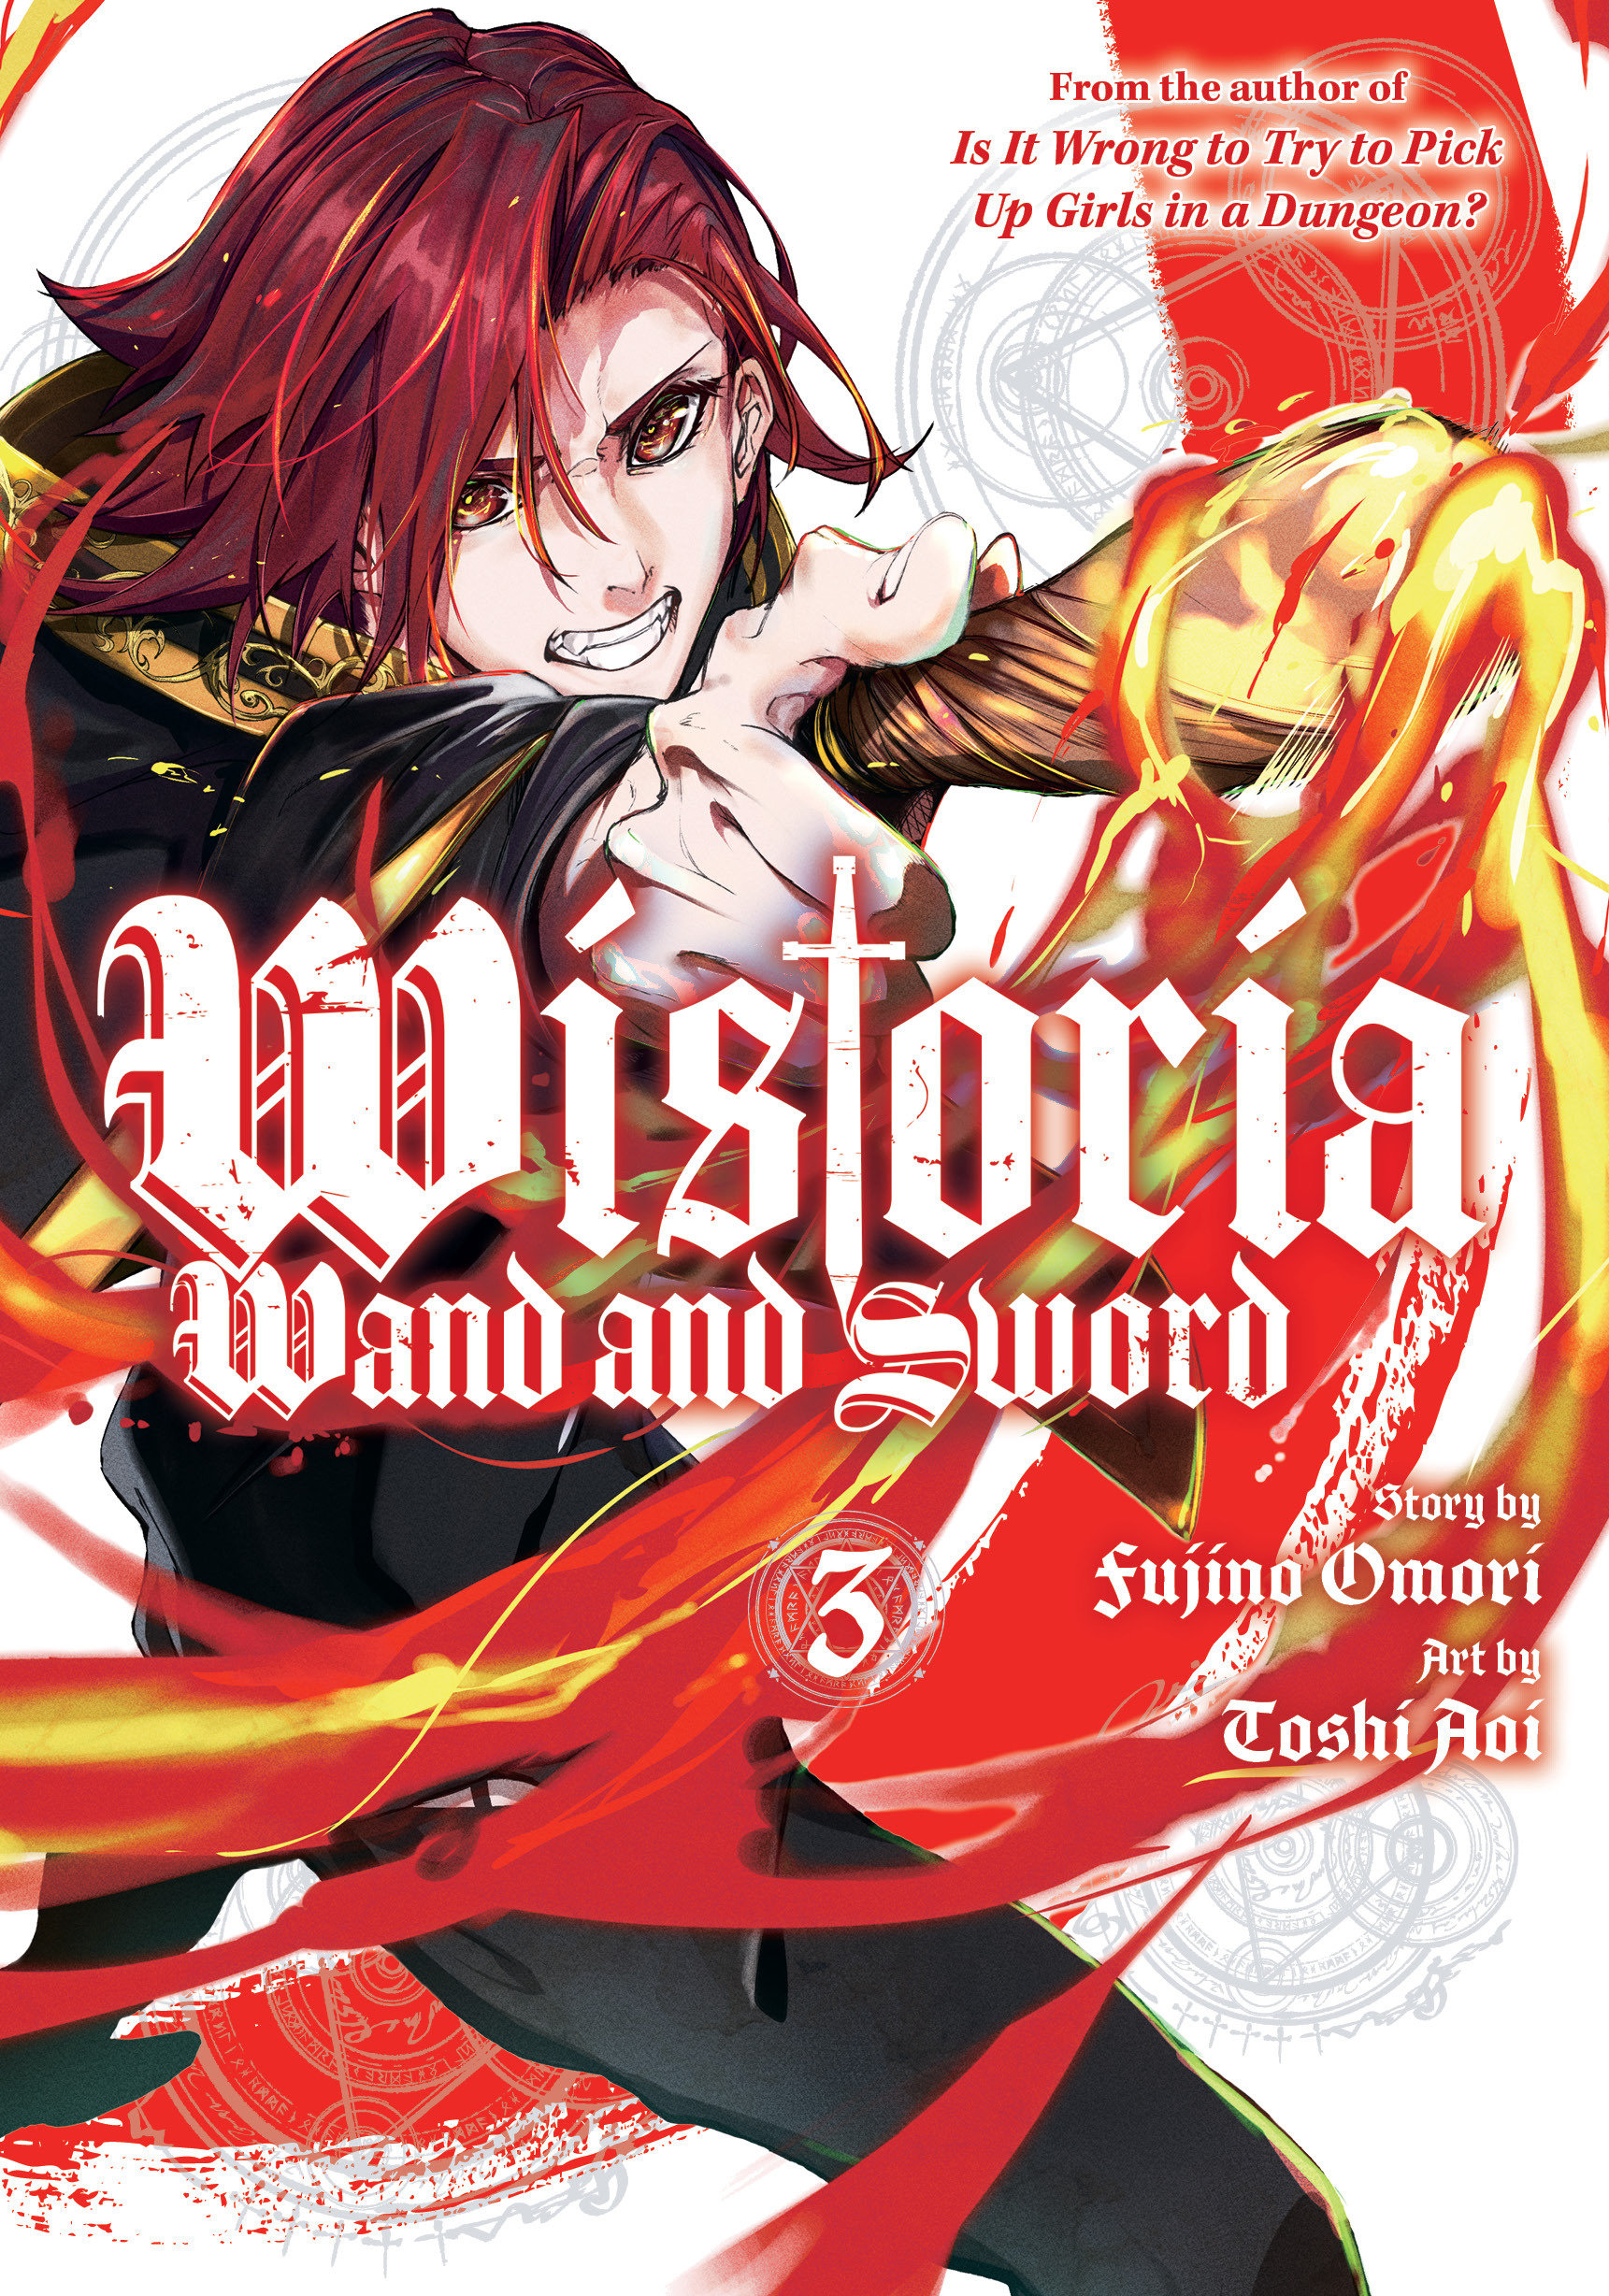 Wistoria Wand & Sword Manga Volume 3